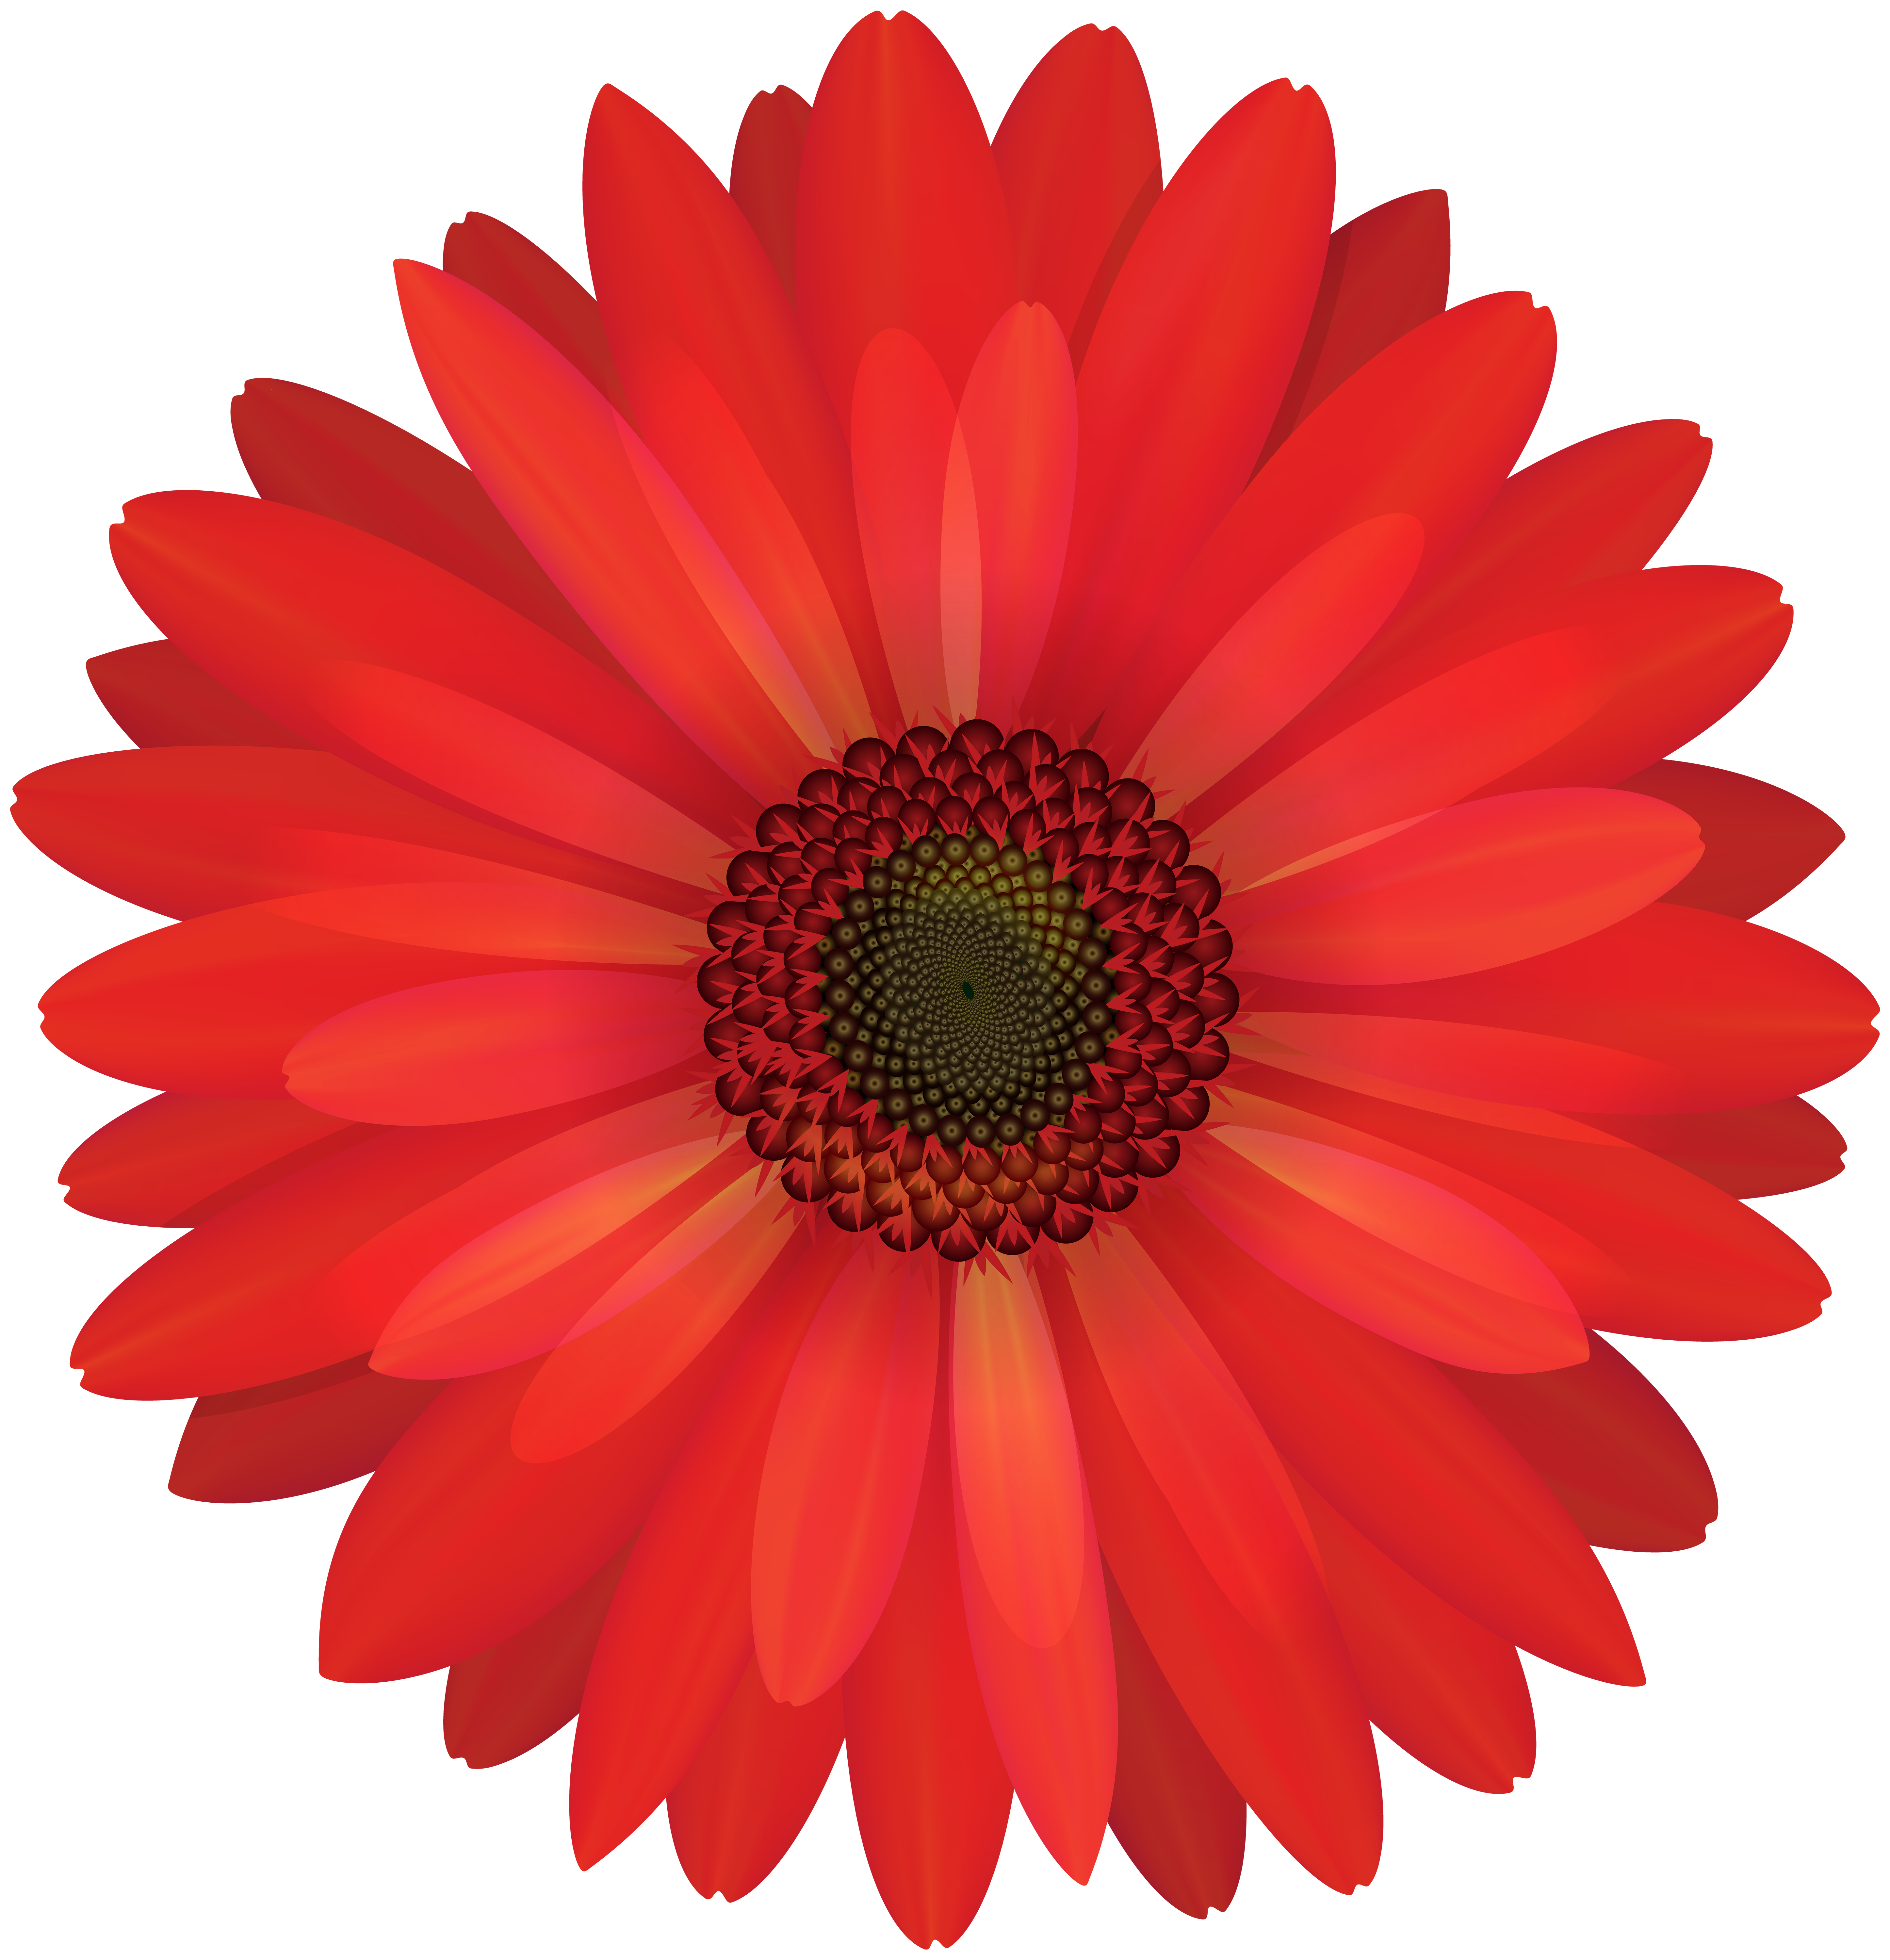 Gerbera Red Flower PNG Clip Art